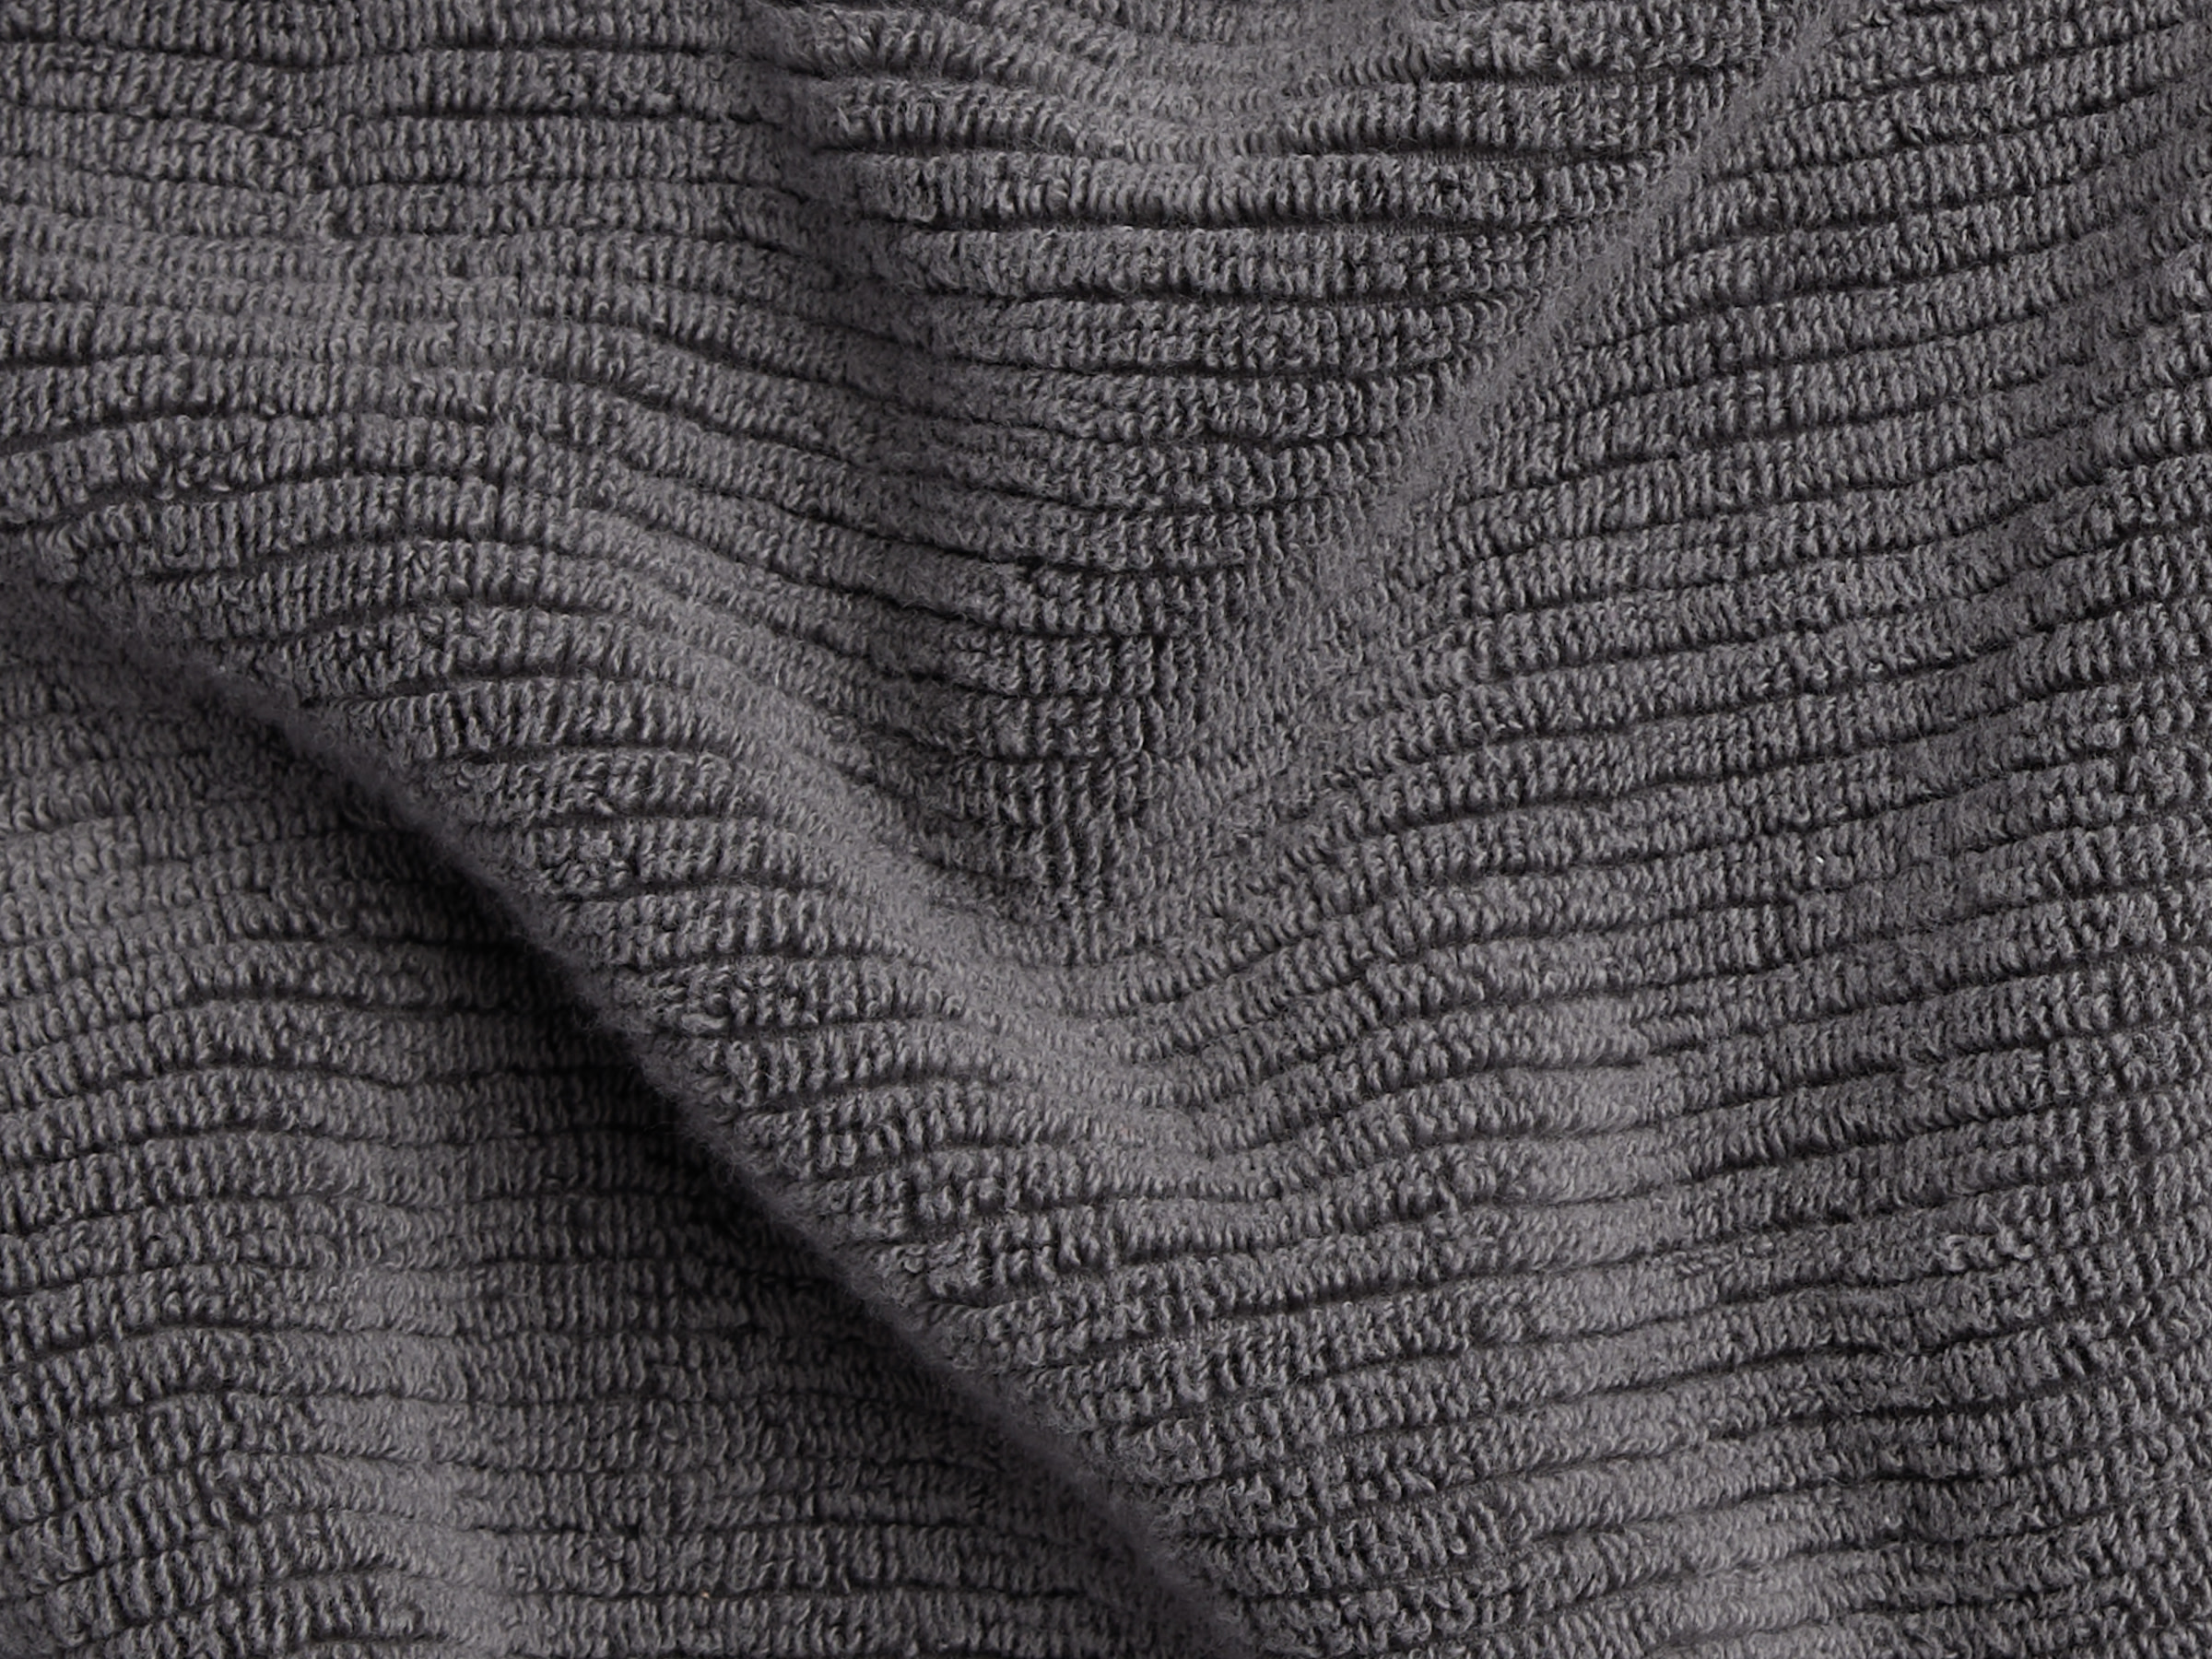 Dark Grey Soft Rib Towels